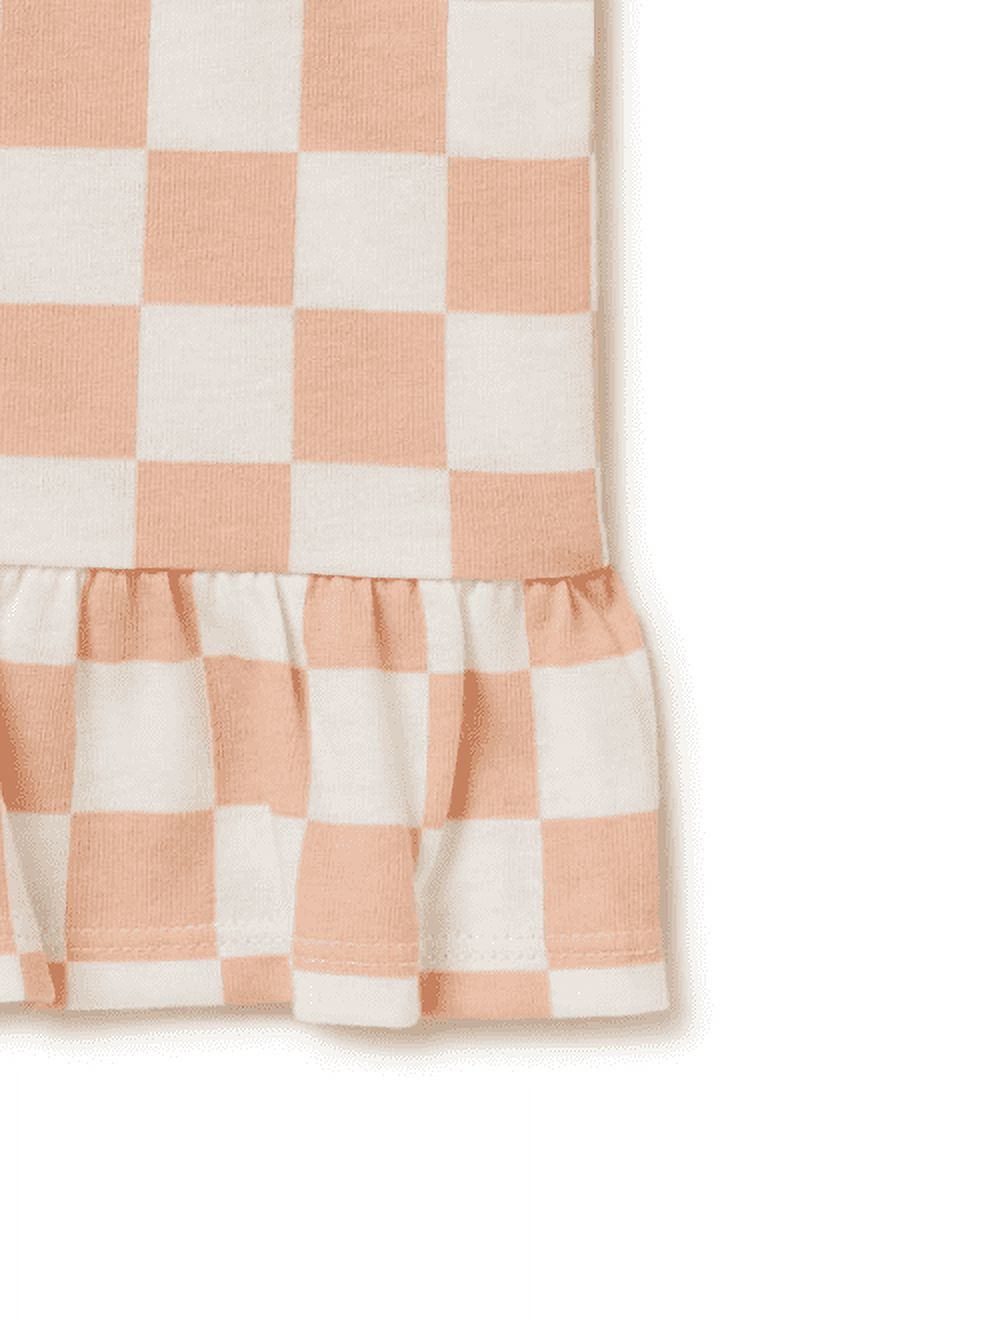 Garanimals Toddler Girls Short Sleeve Peplum Tee, Sizes 12 Months-5T - image 3 of 4